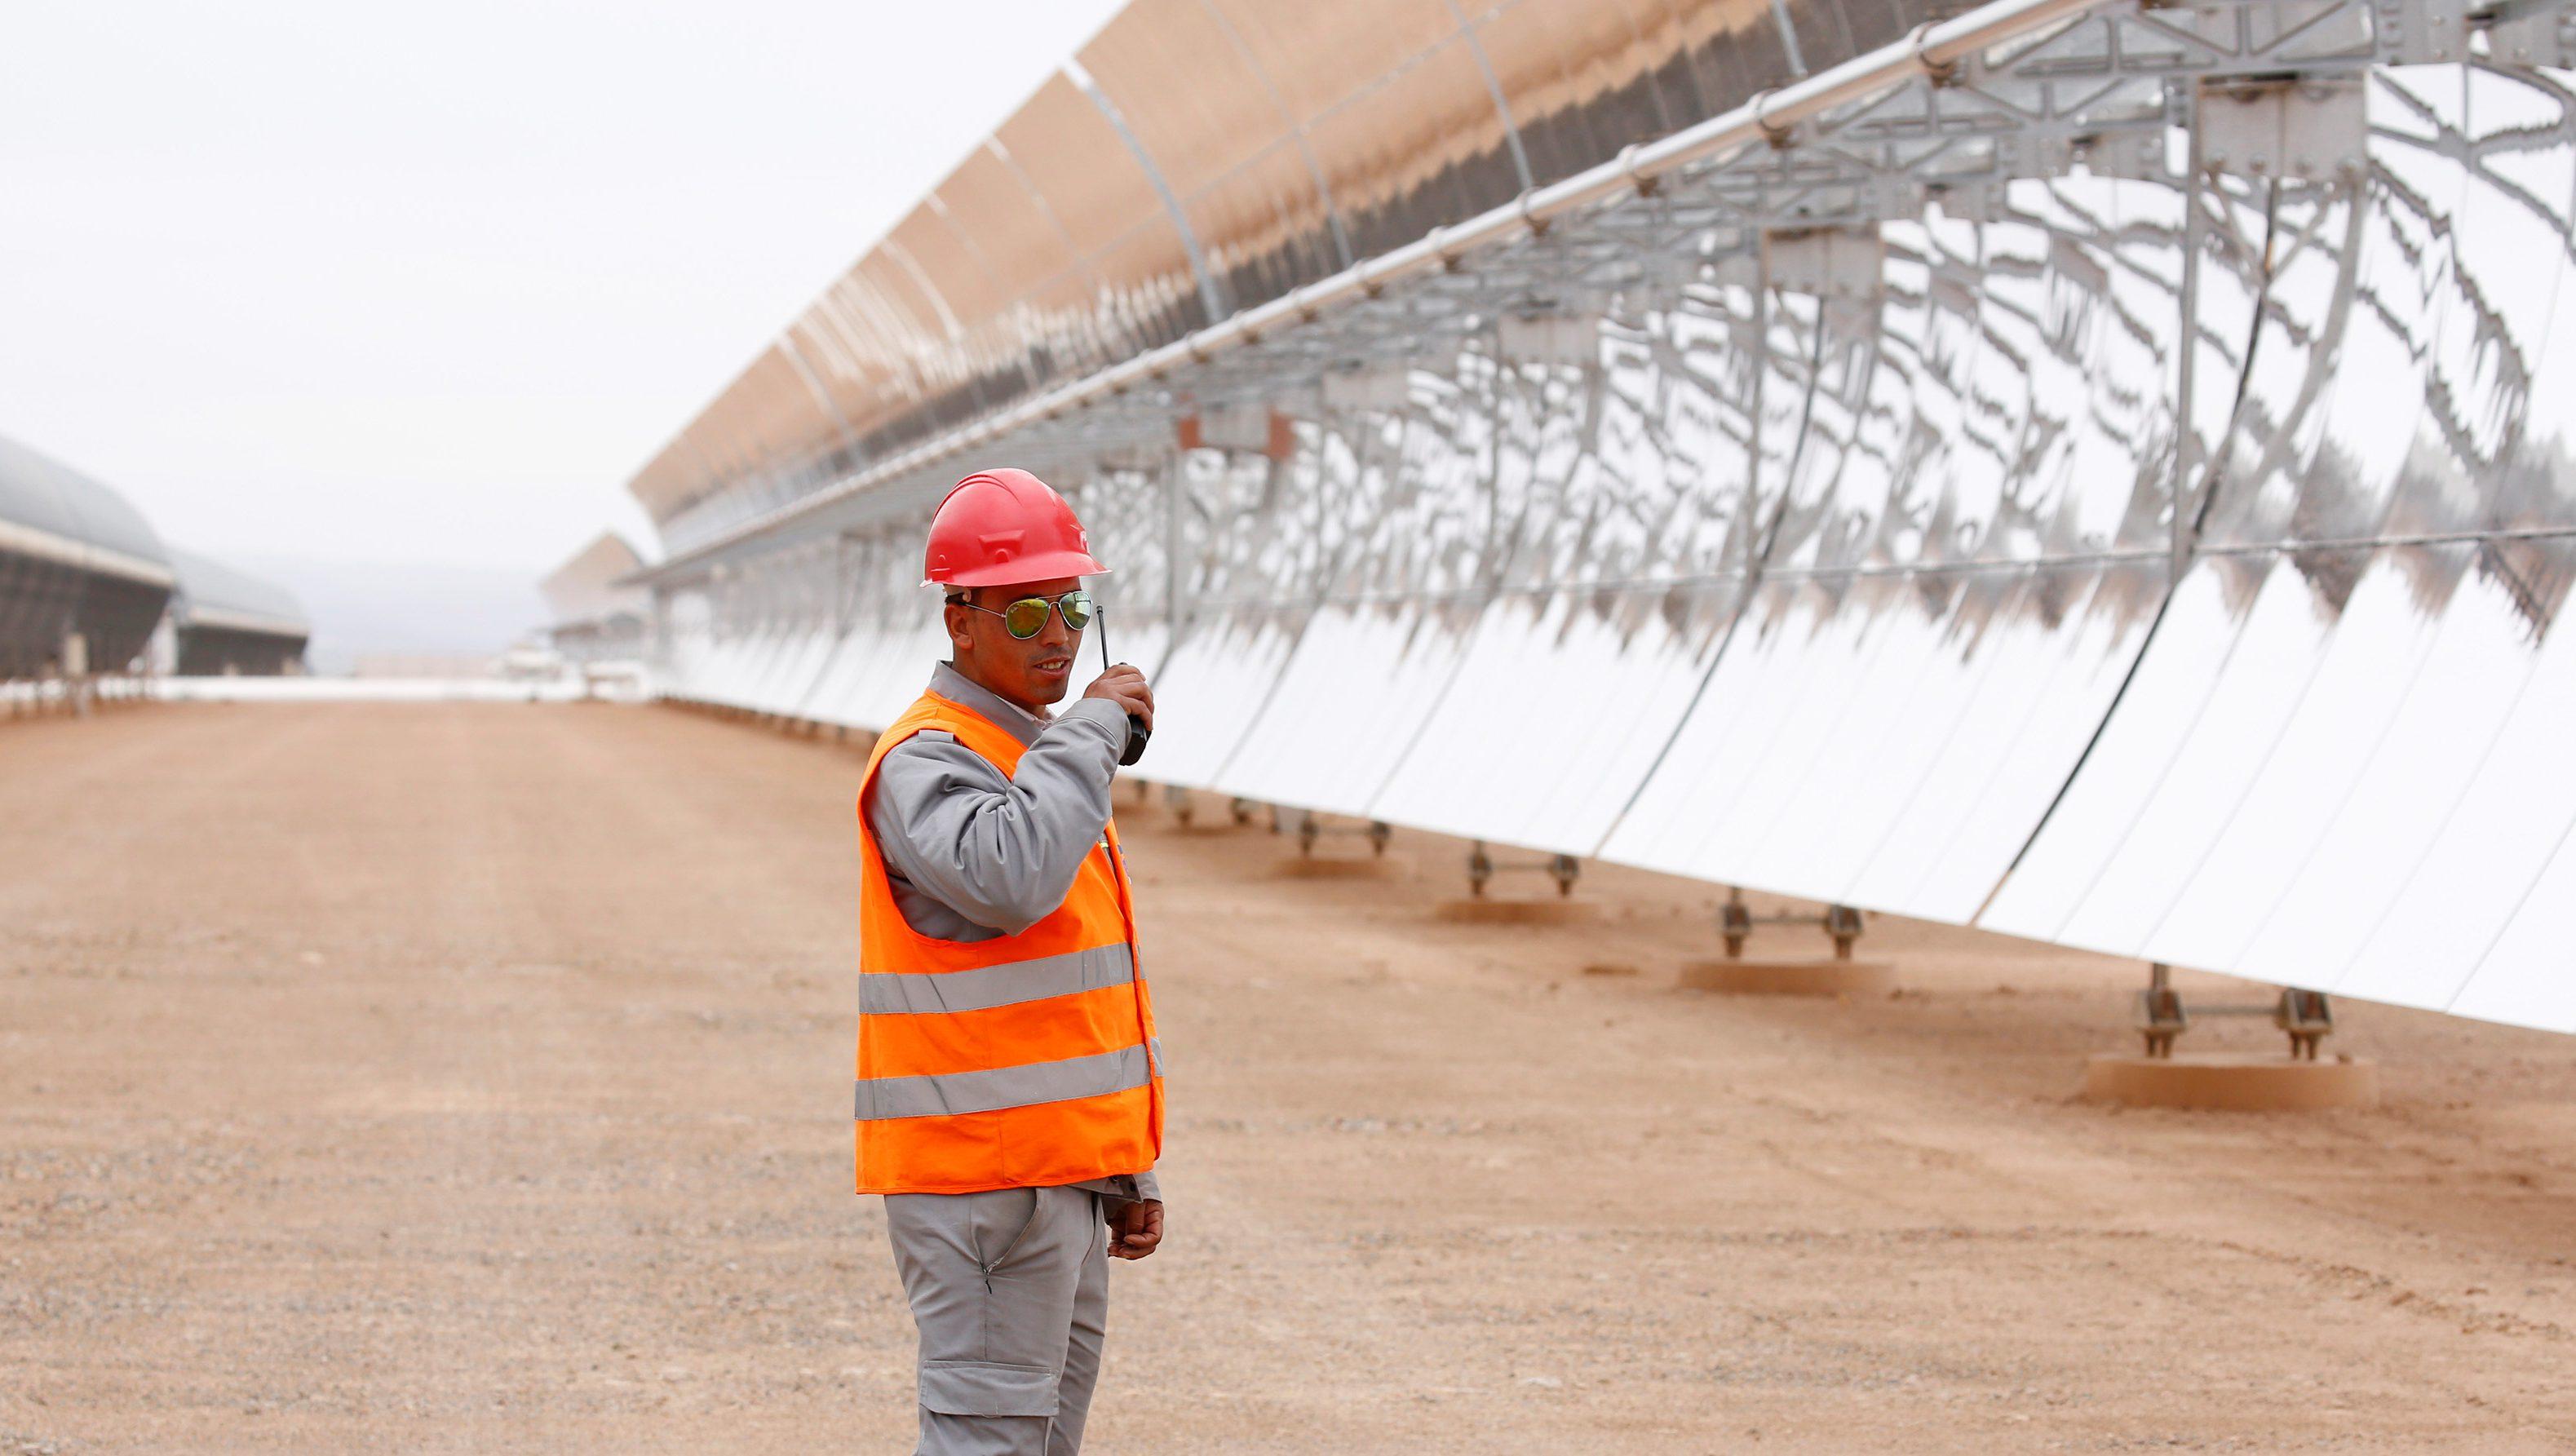 Dubai-based solar developer raises $65m to power MENA